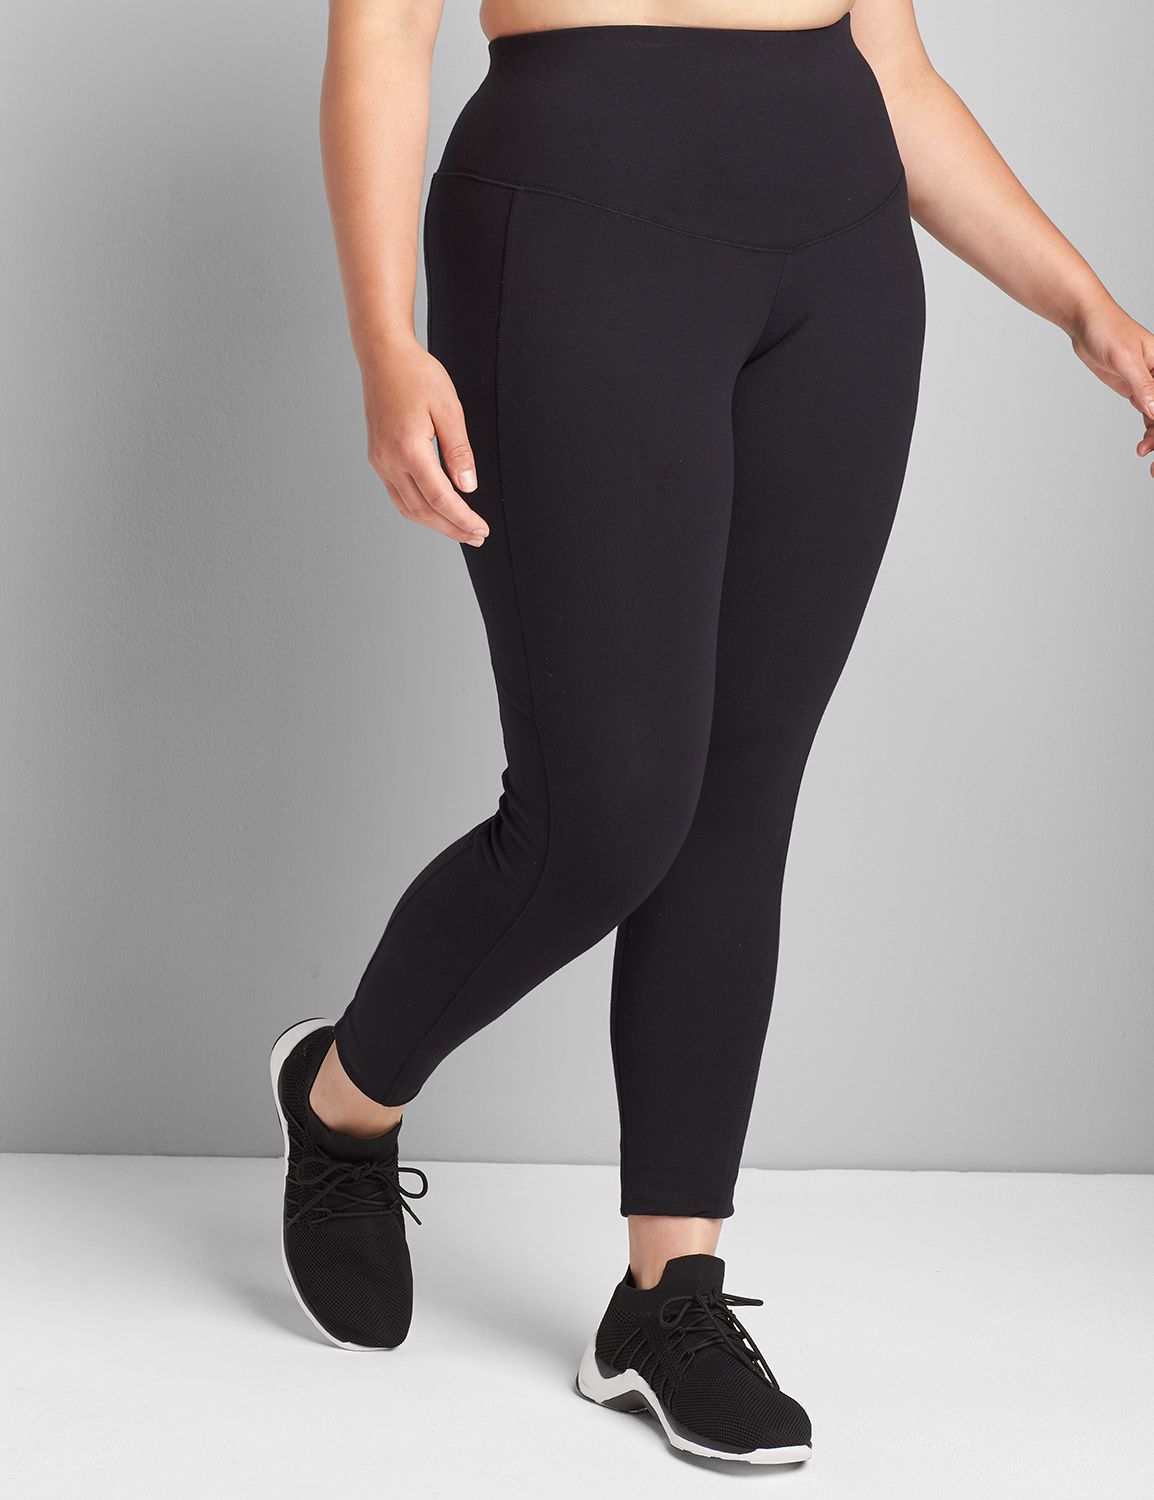 Nike Women's Full Length Power Fabric For Stretch Colorblocked Leggings S/Grey/Black  